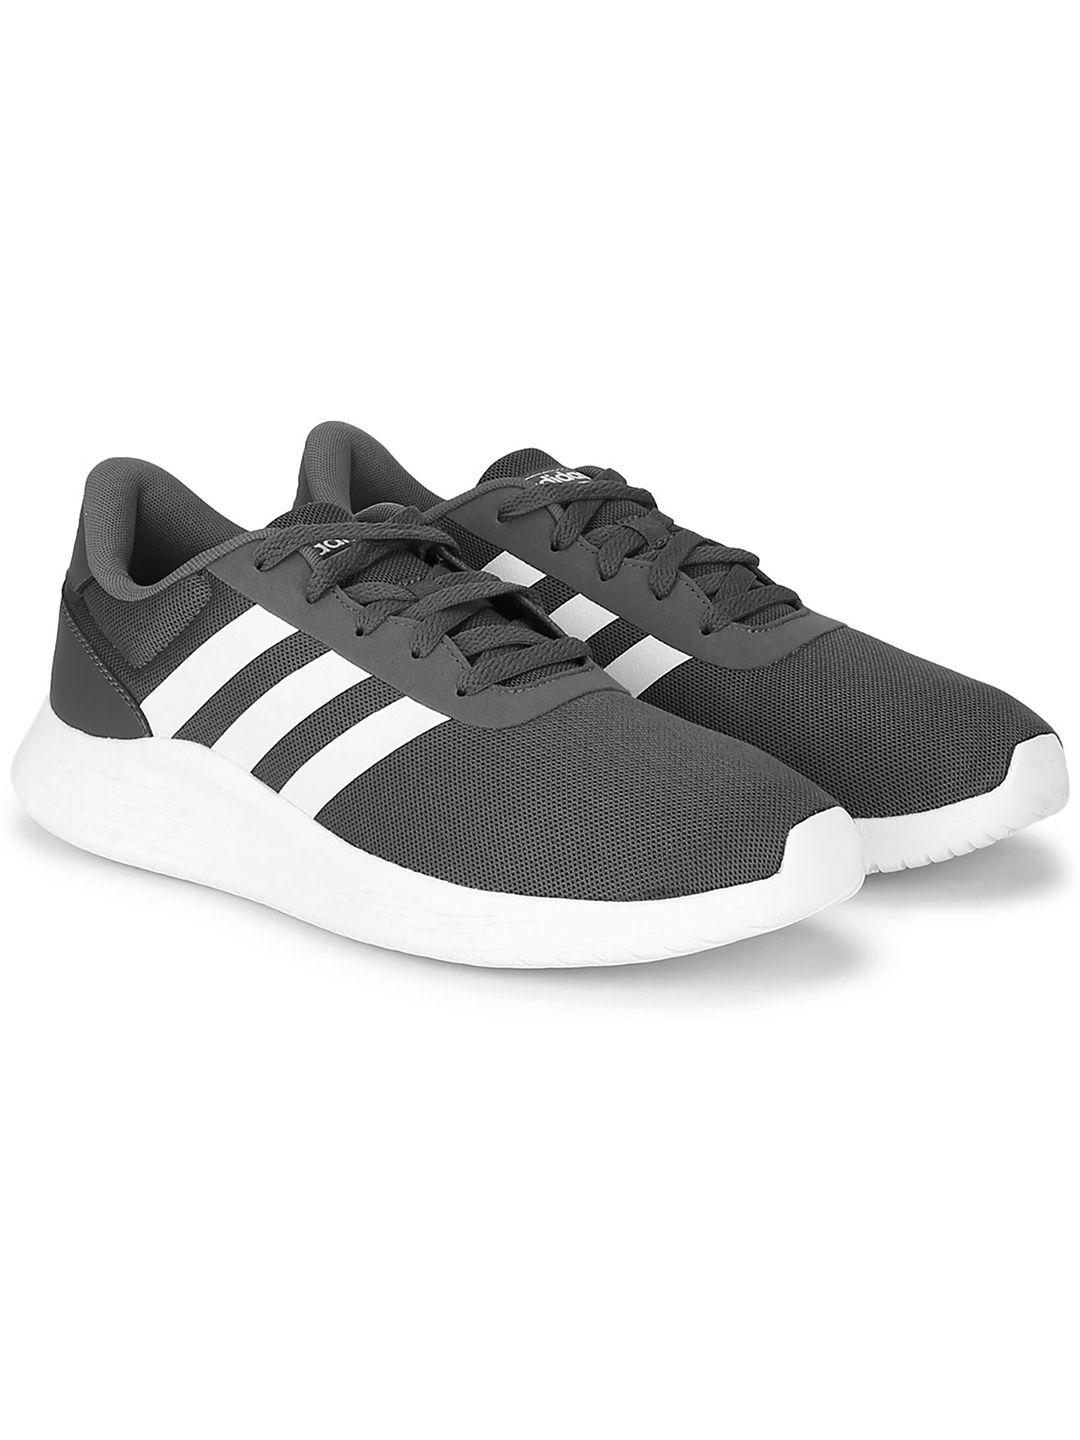 adidas men charcoal grey mesh running shoes